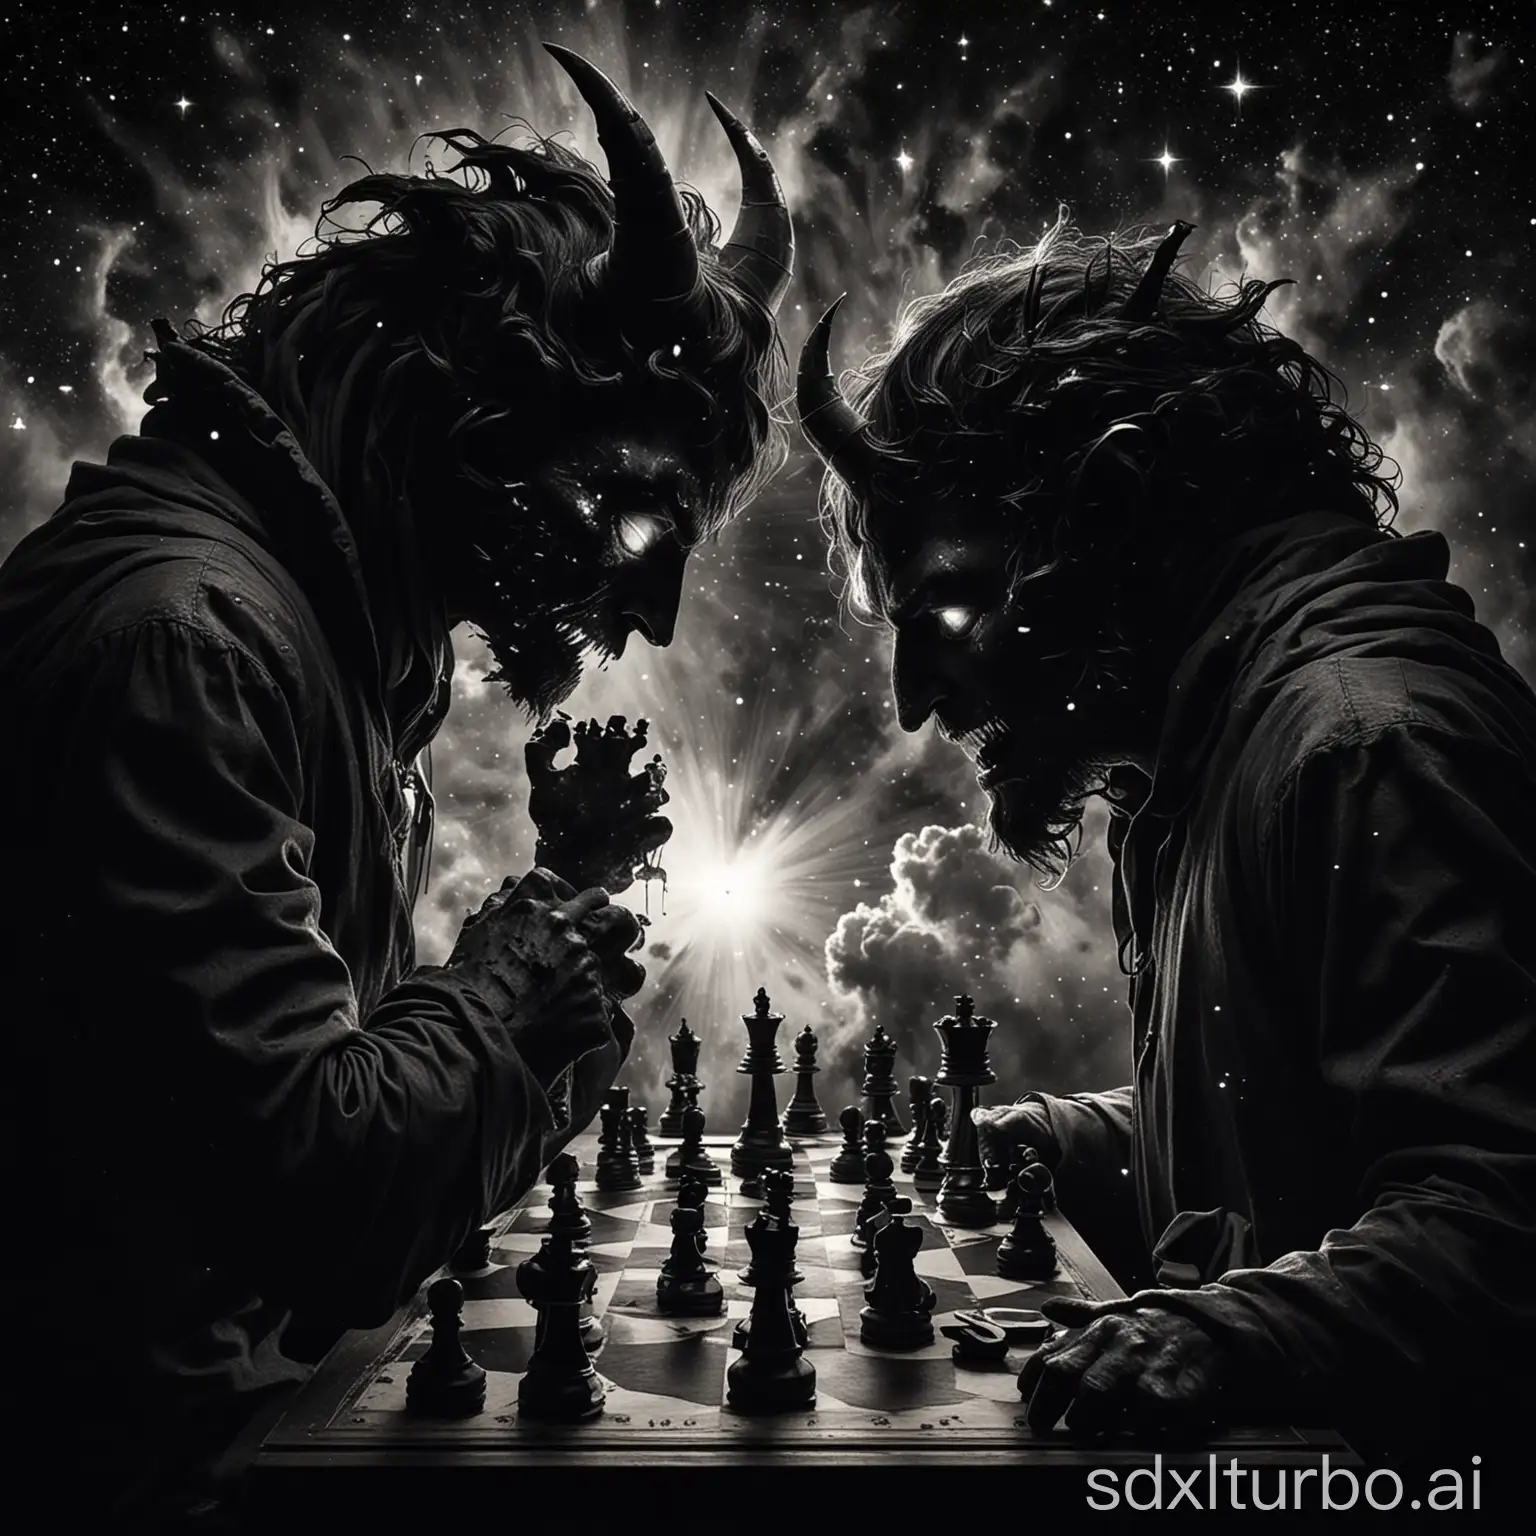 Dark-Demons-Playing-Chess-in-Silhouette-Against-Exploding-Stars